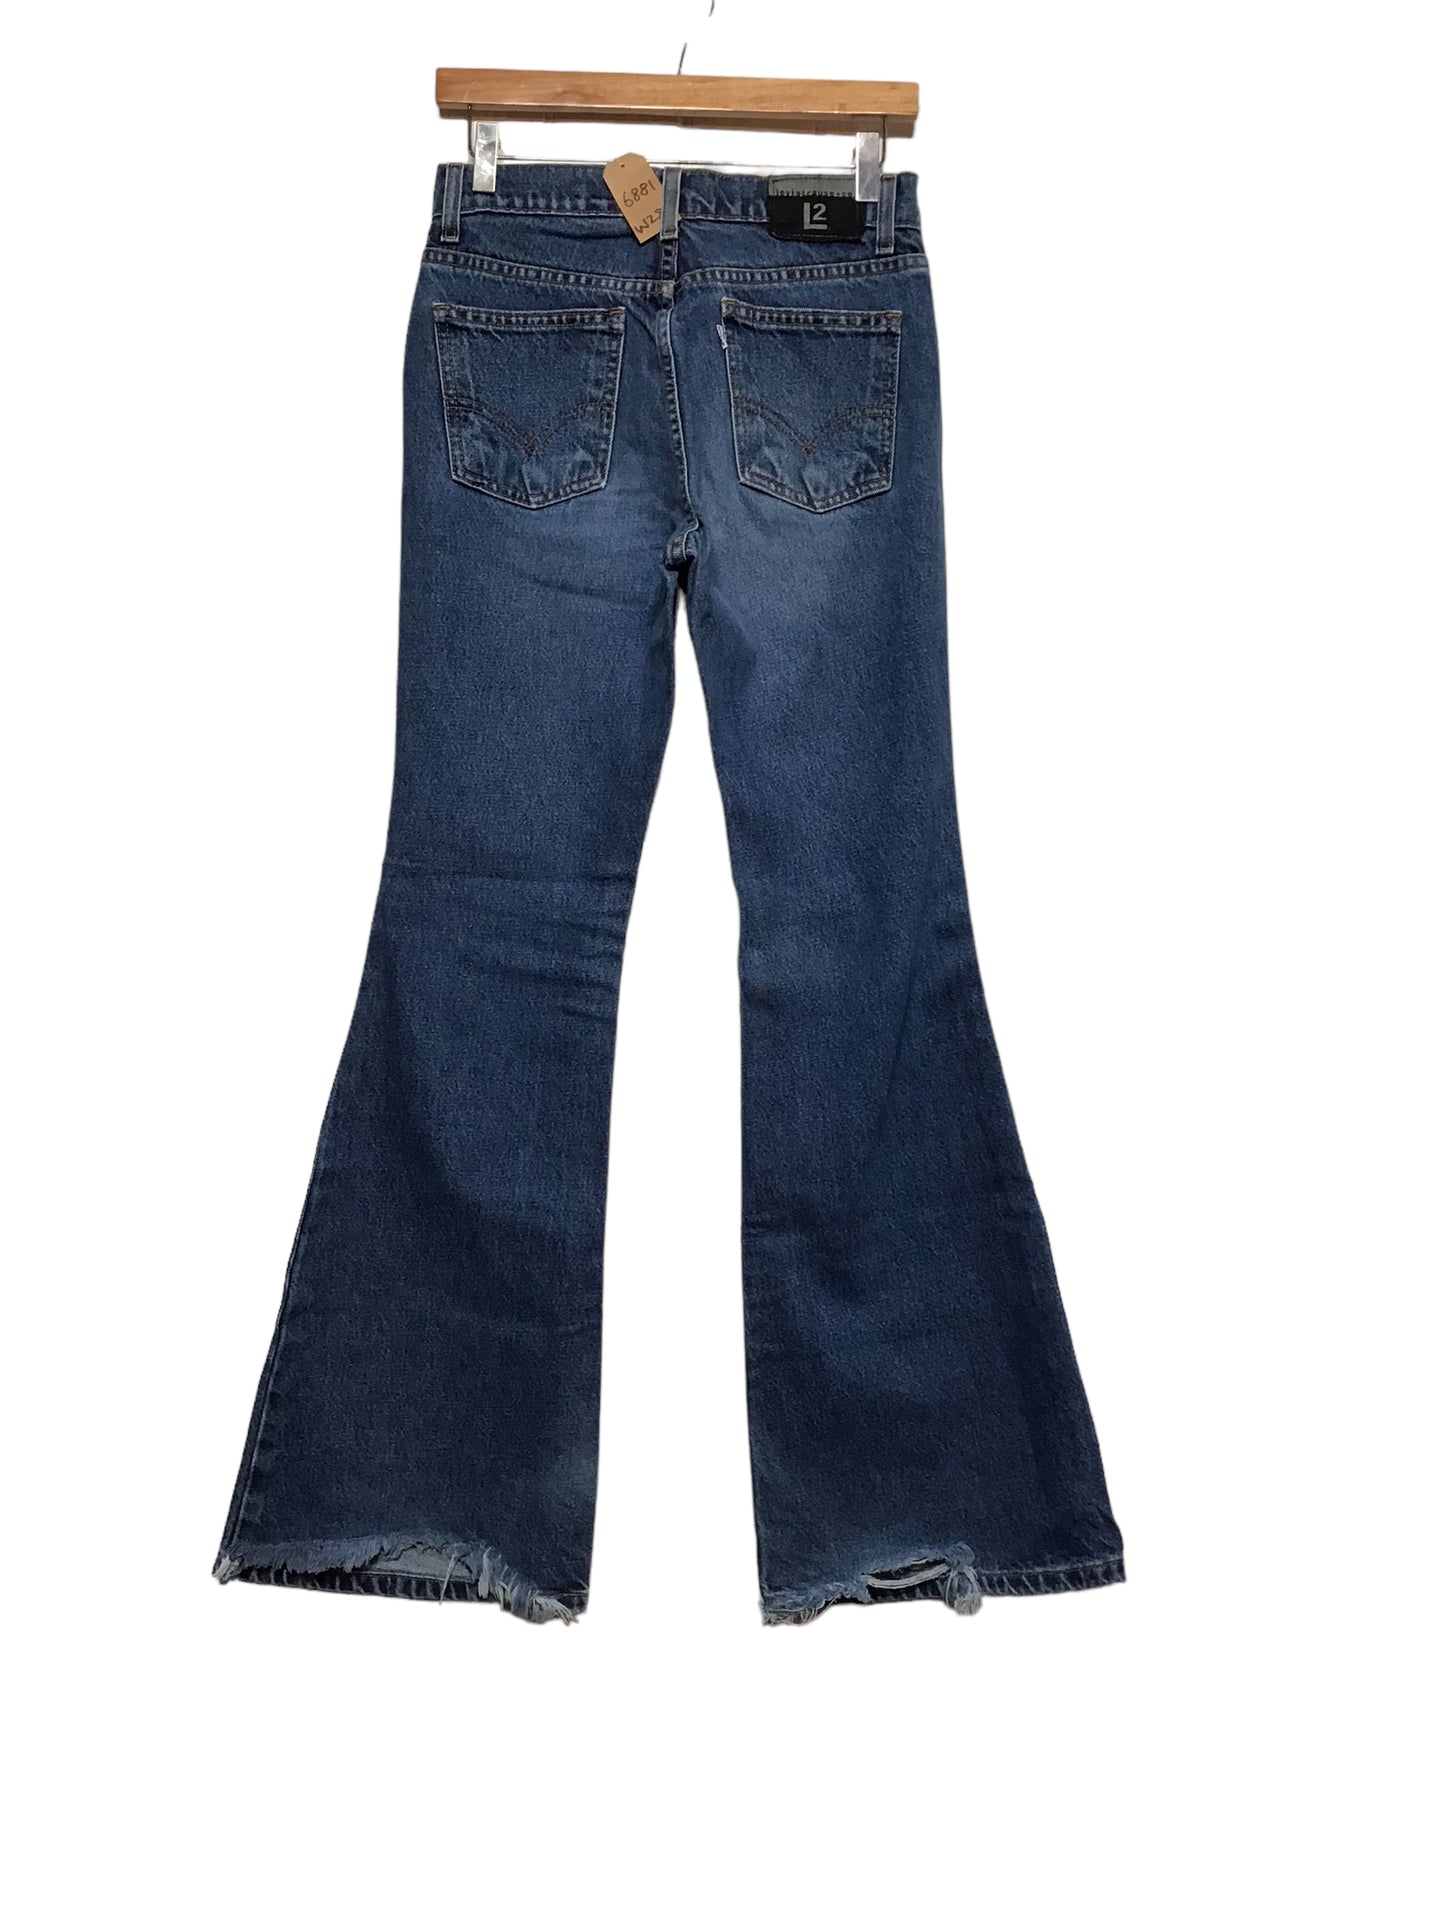 Levi L2 Jeans (29x33)